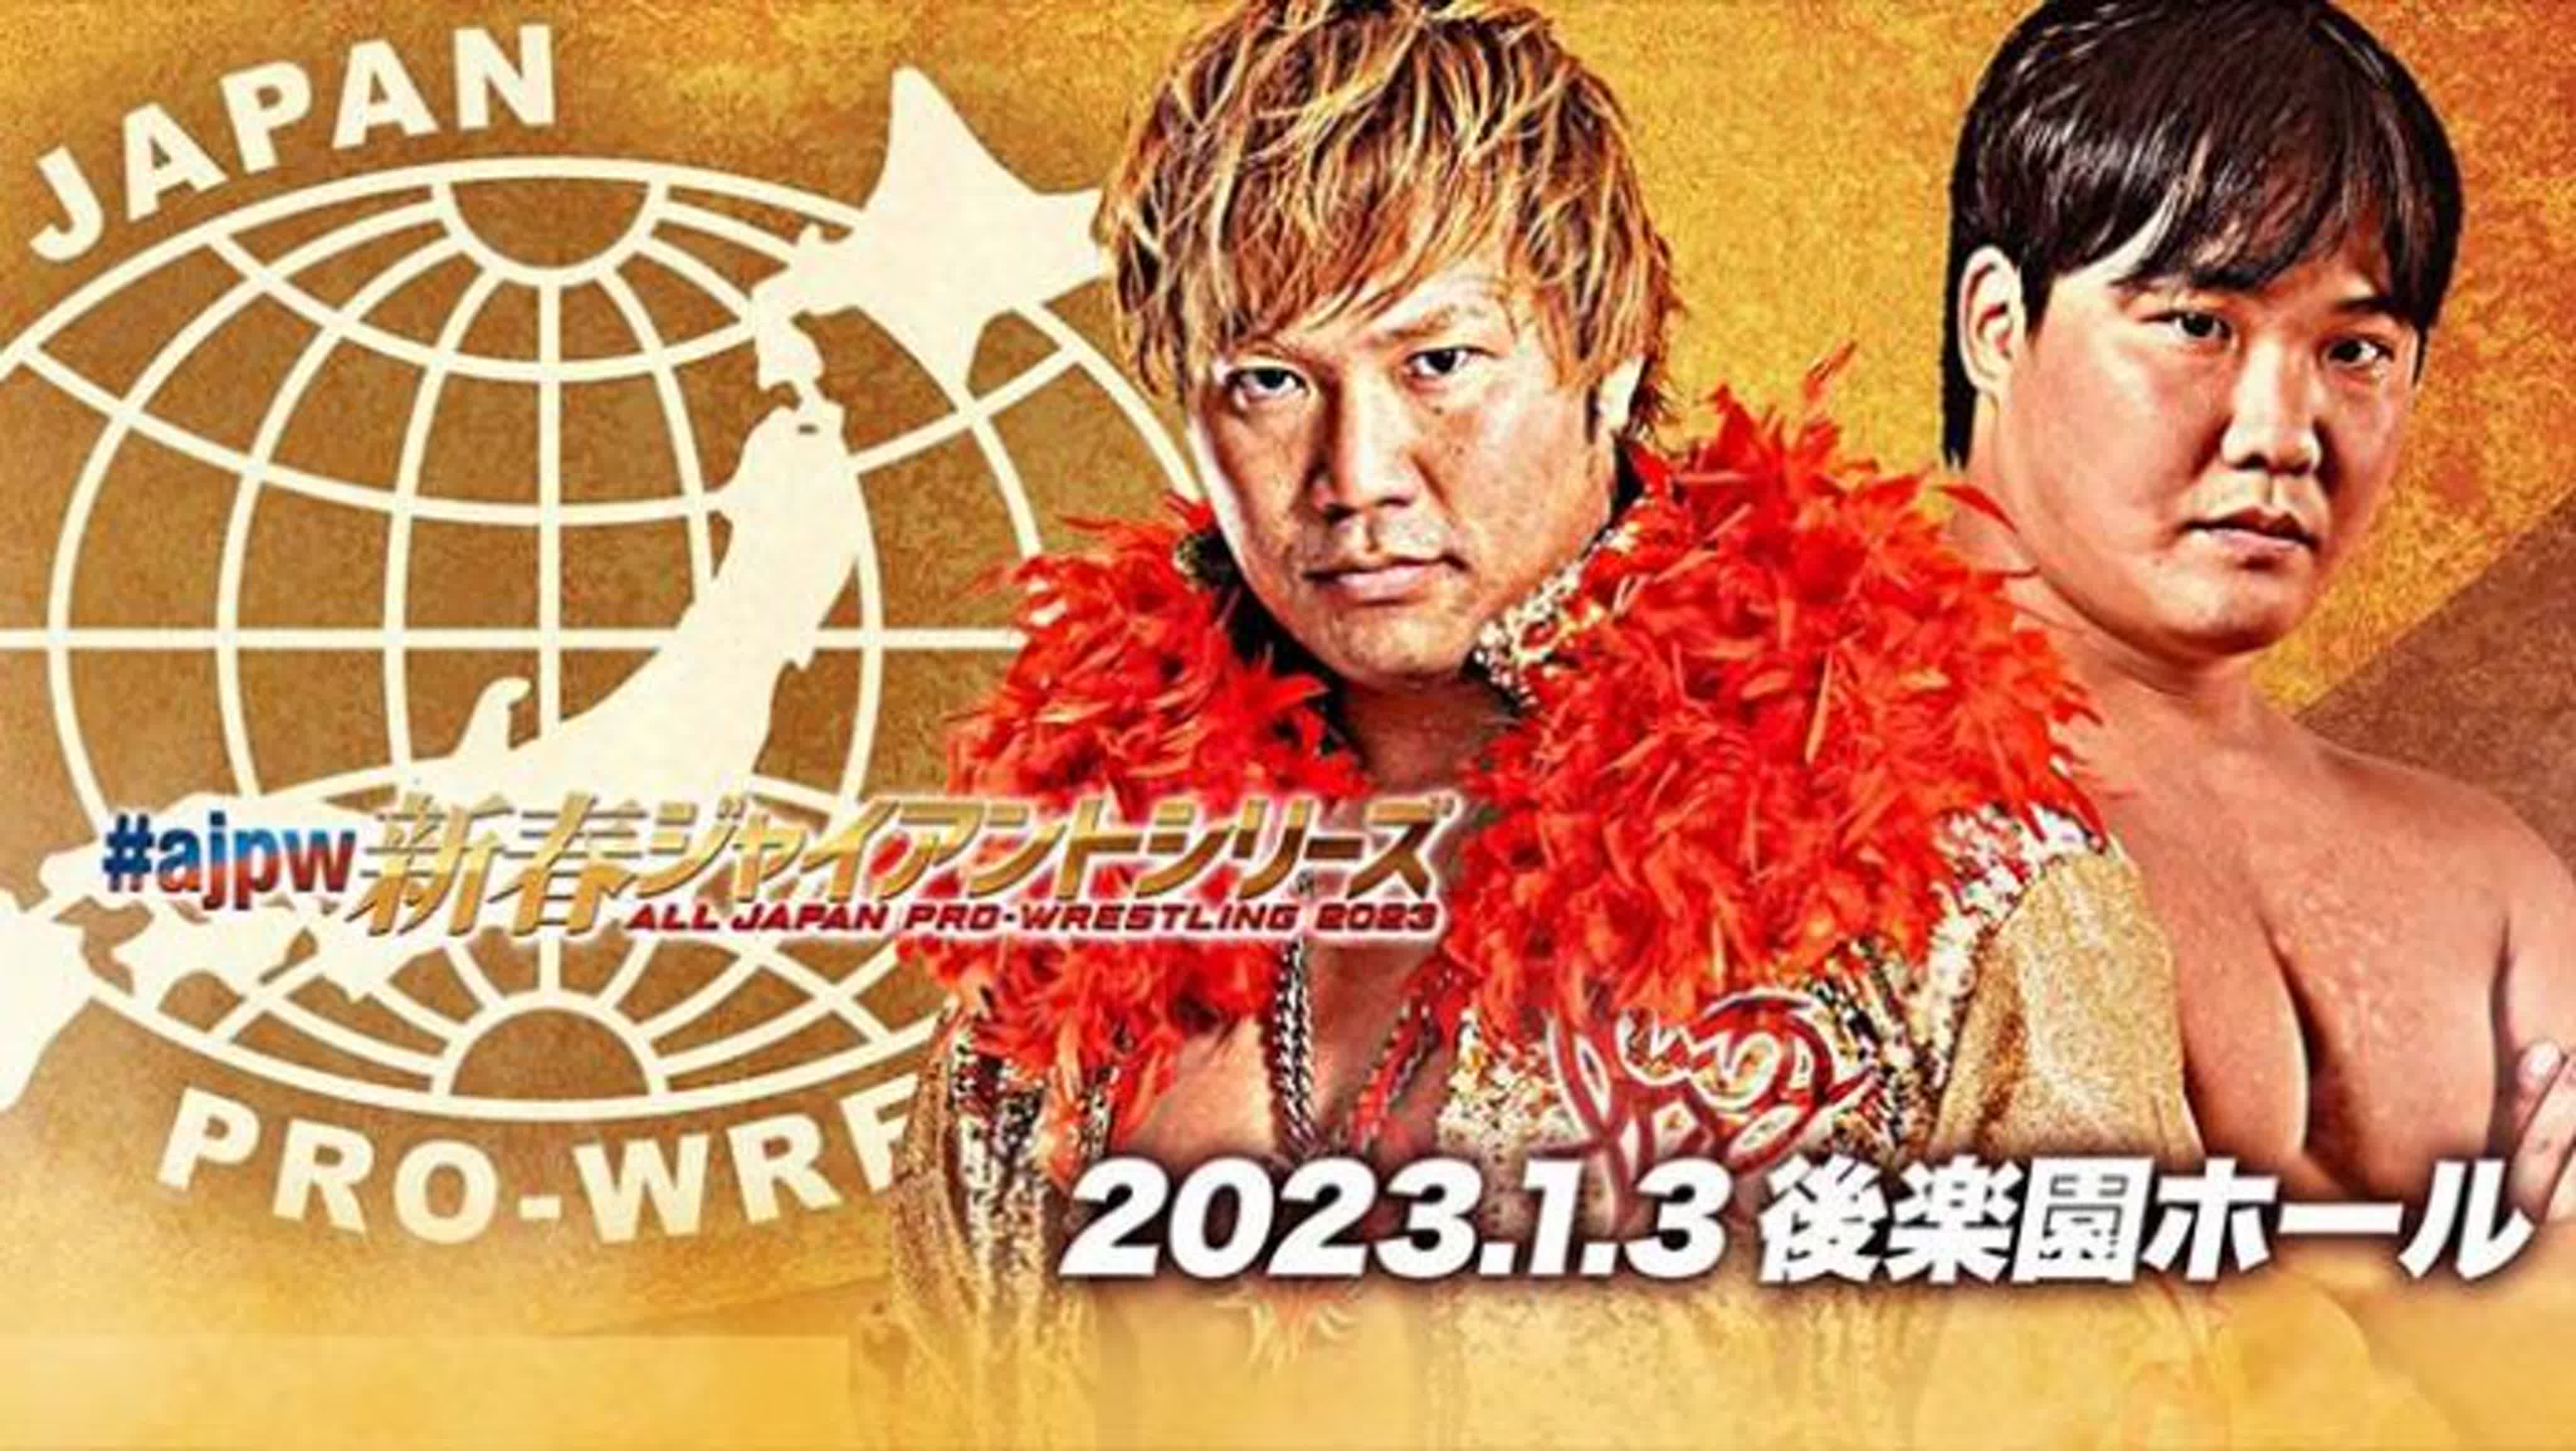 AJPW (All Japan Pro Wrestling)